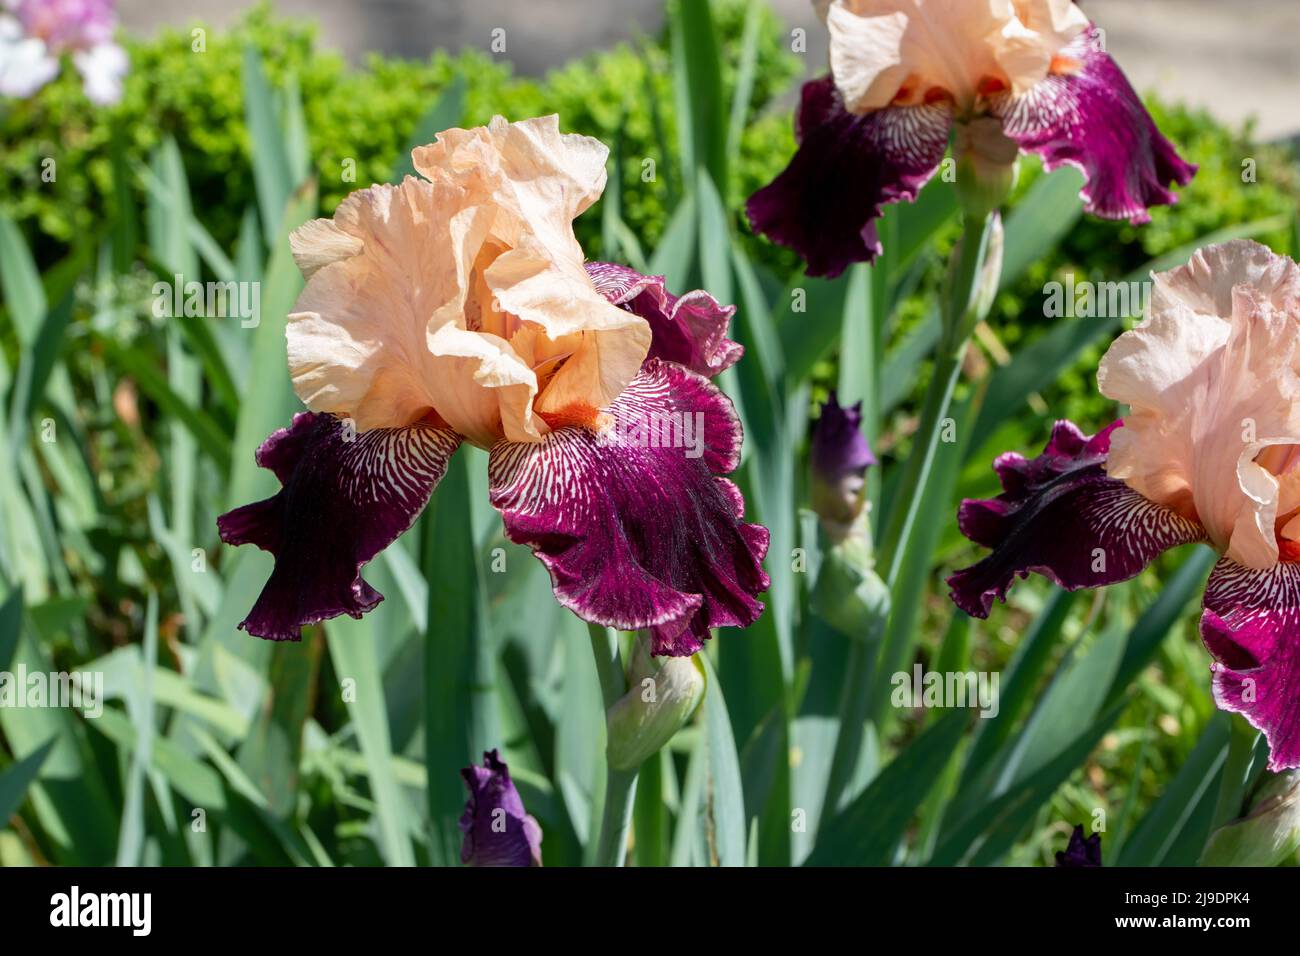 Bearded iris cultivar flowers with peach standards purple falls and capsicum red beard. Bright white sunburst around beards Stock Photo